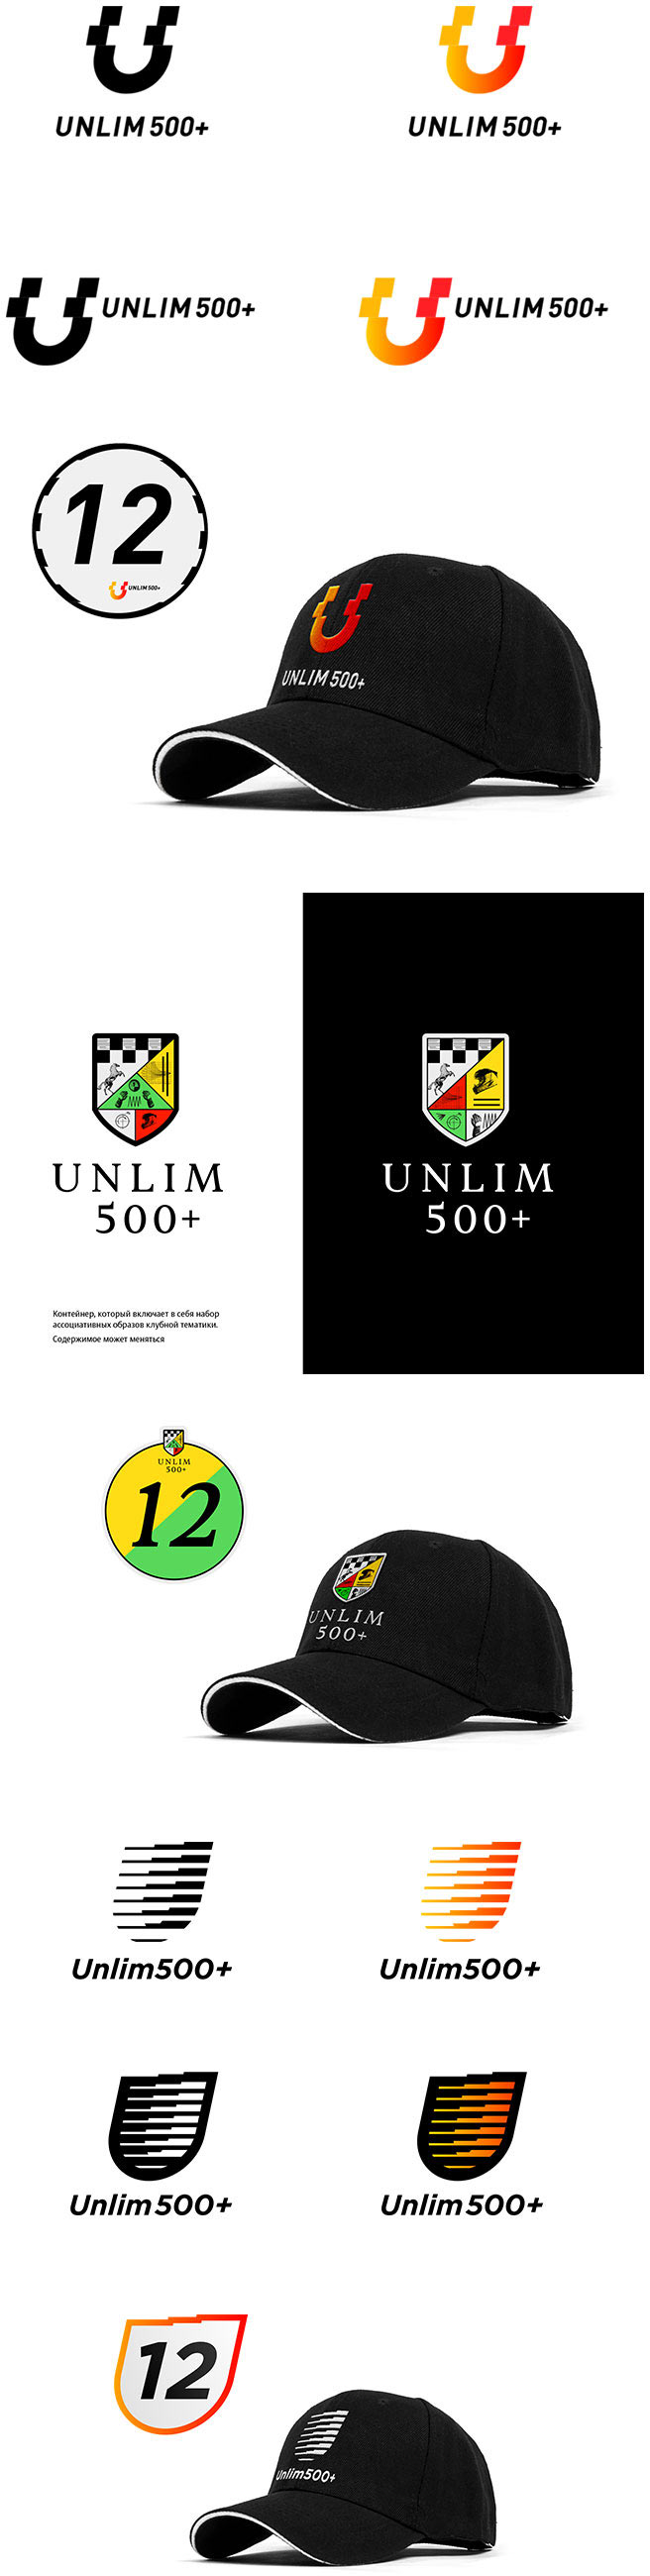 unlim500 logo process 08